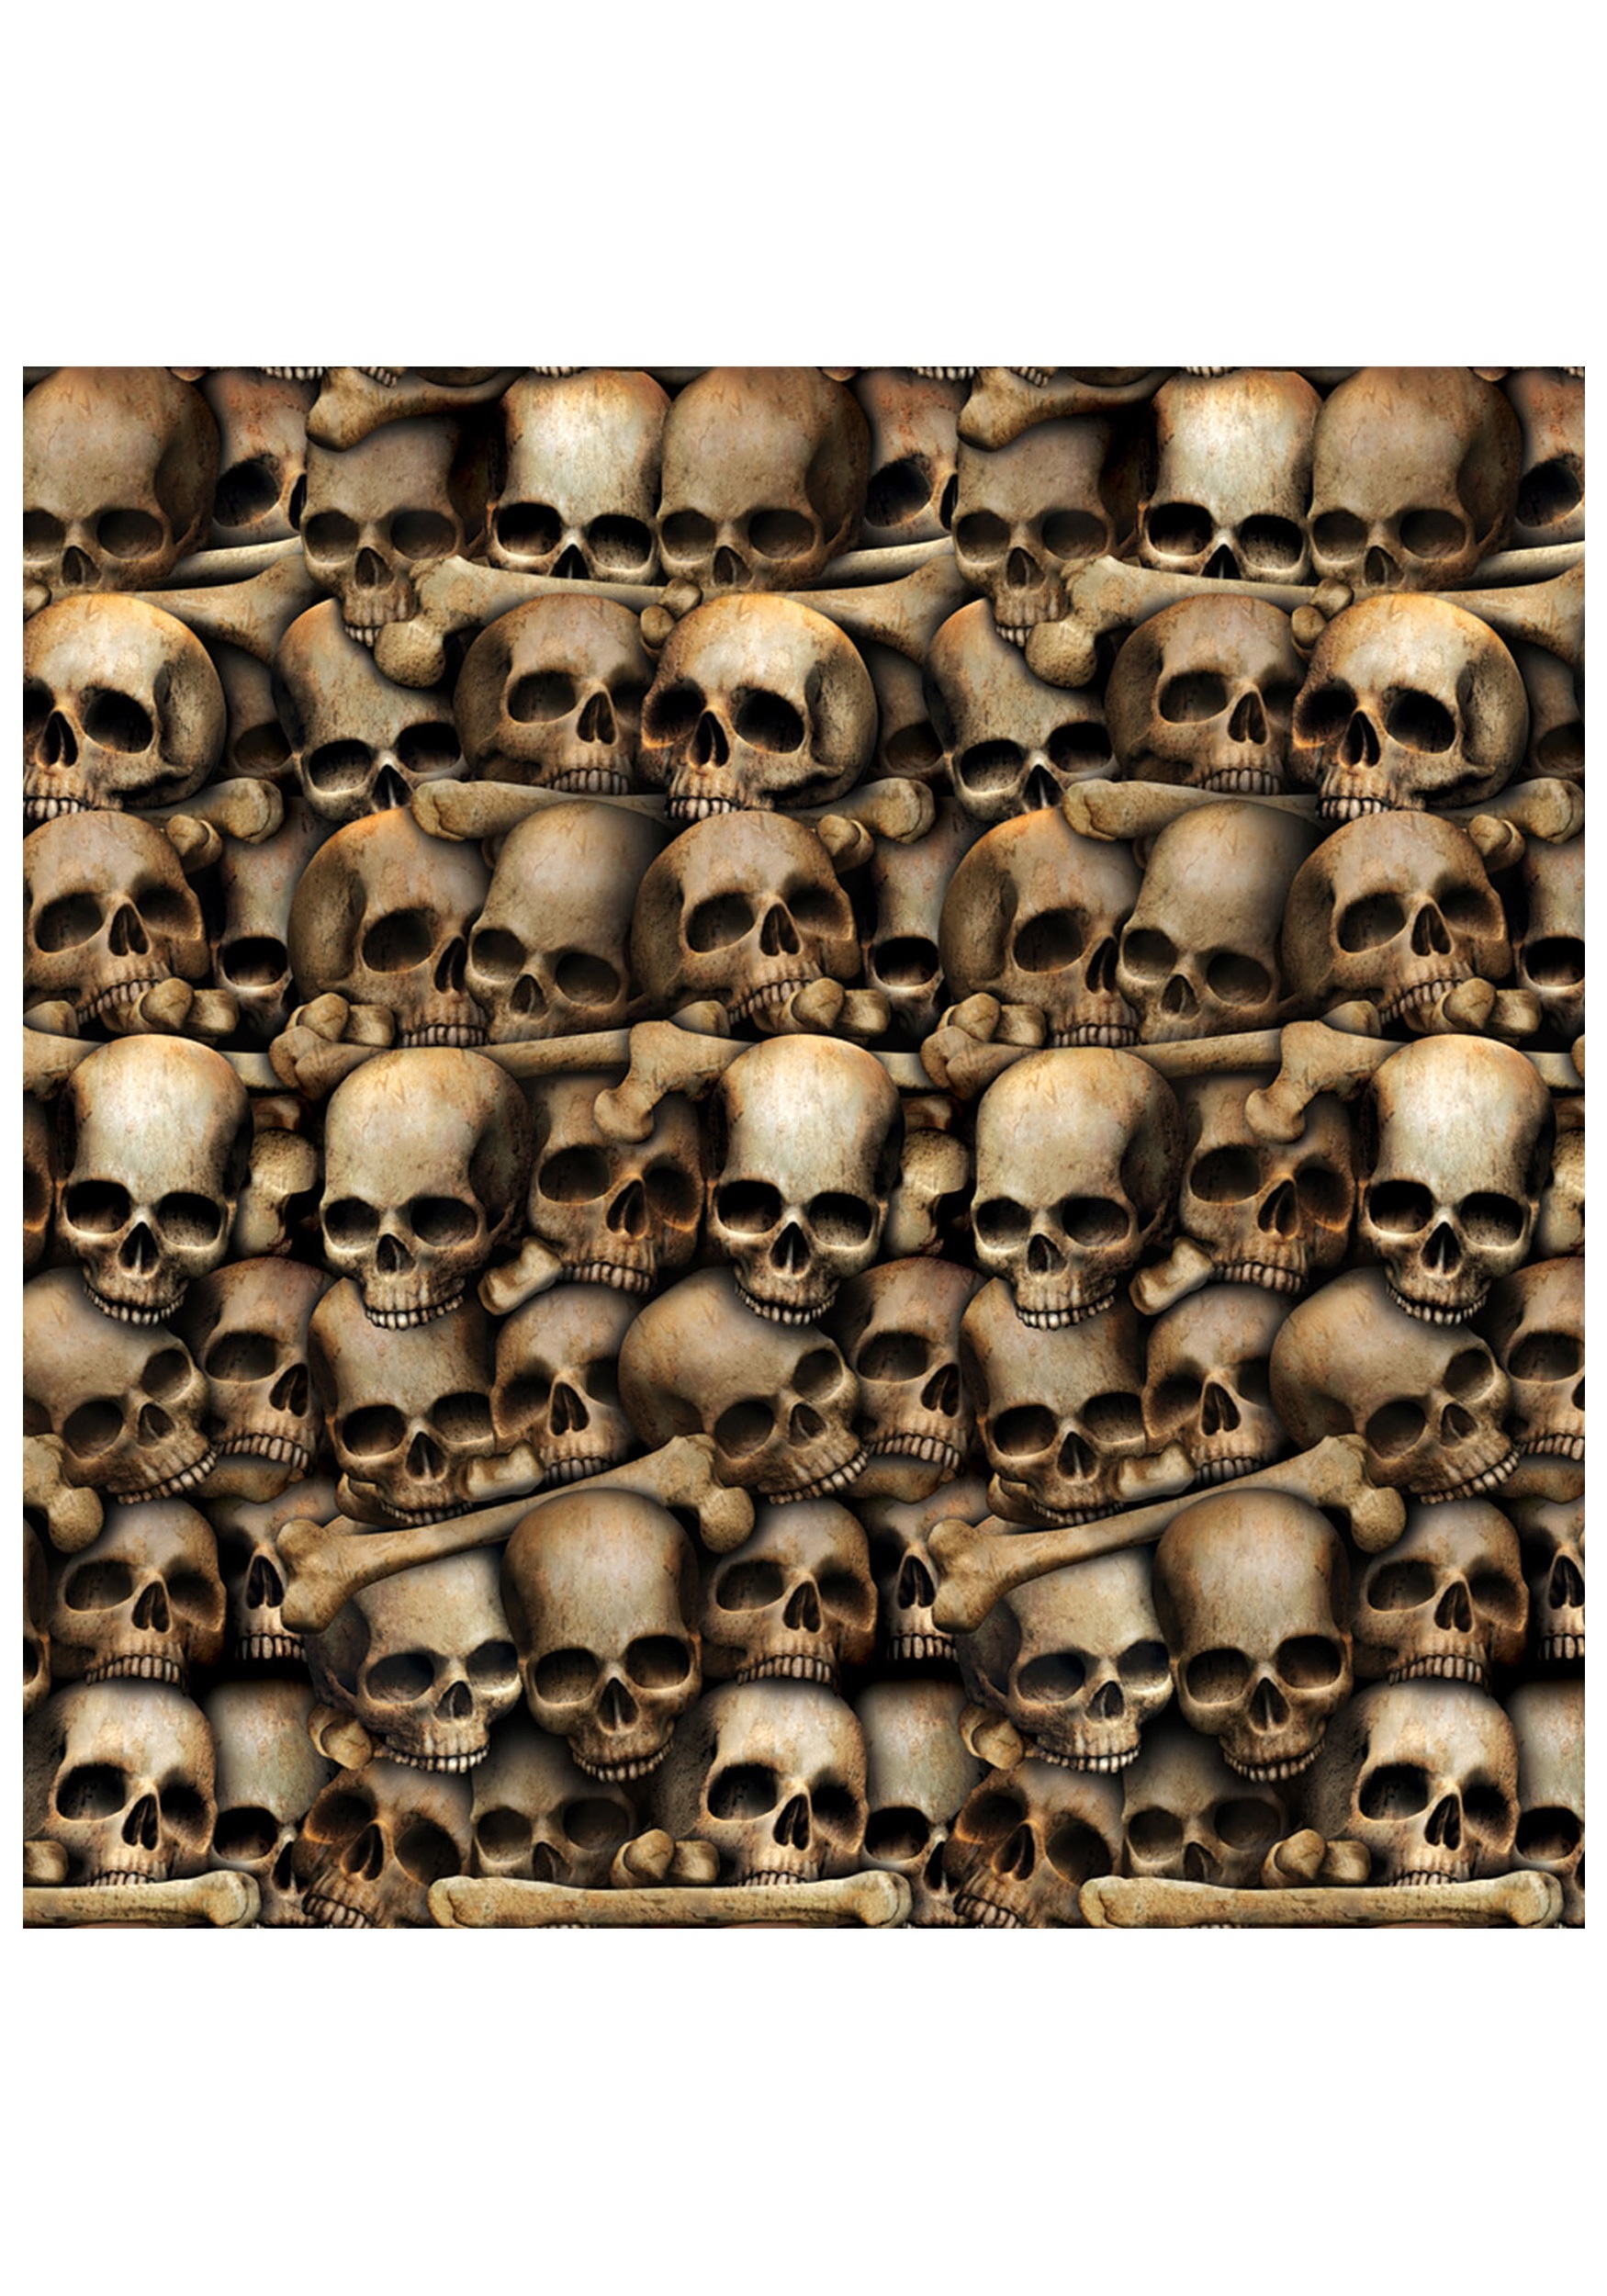 Wall Of Skulls Catacombs Backdrop Decoration